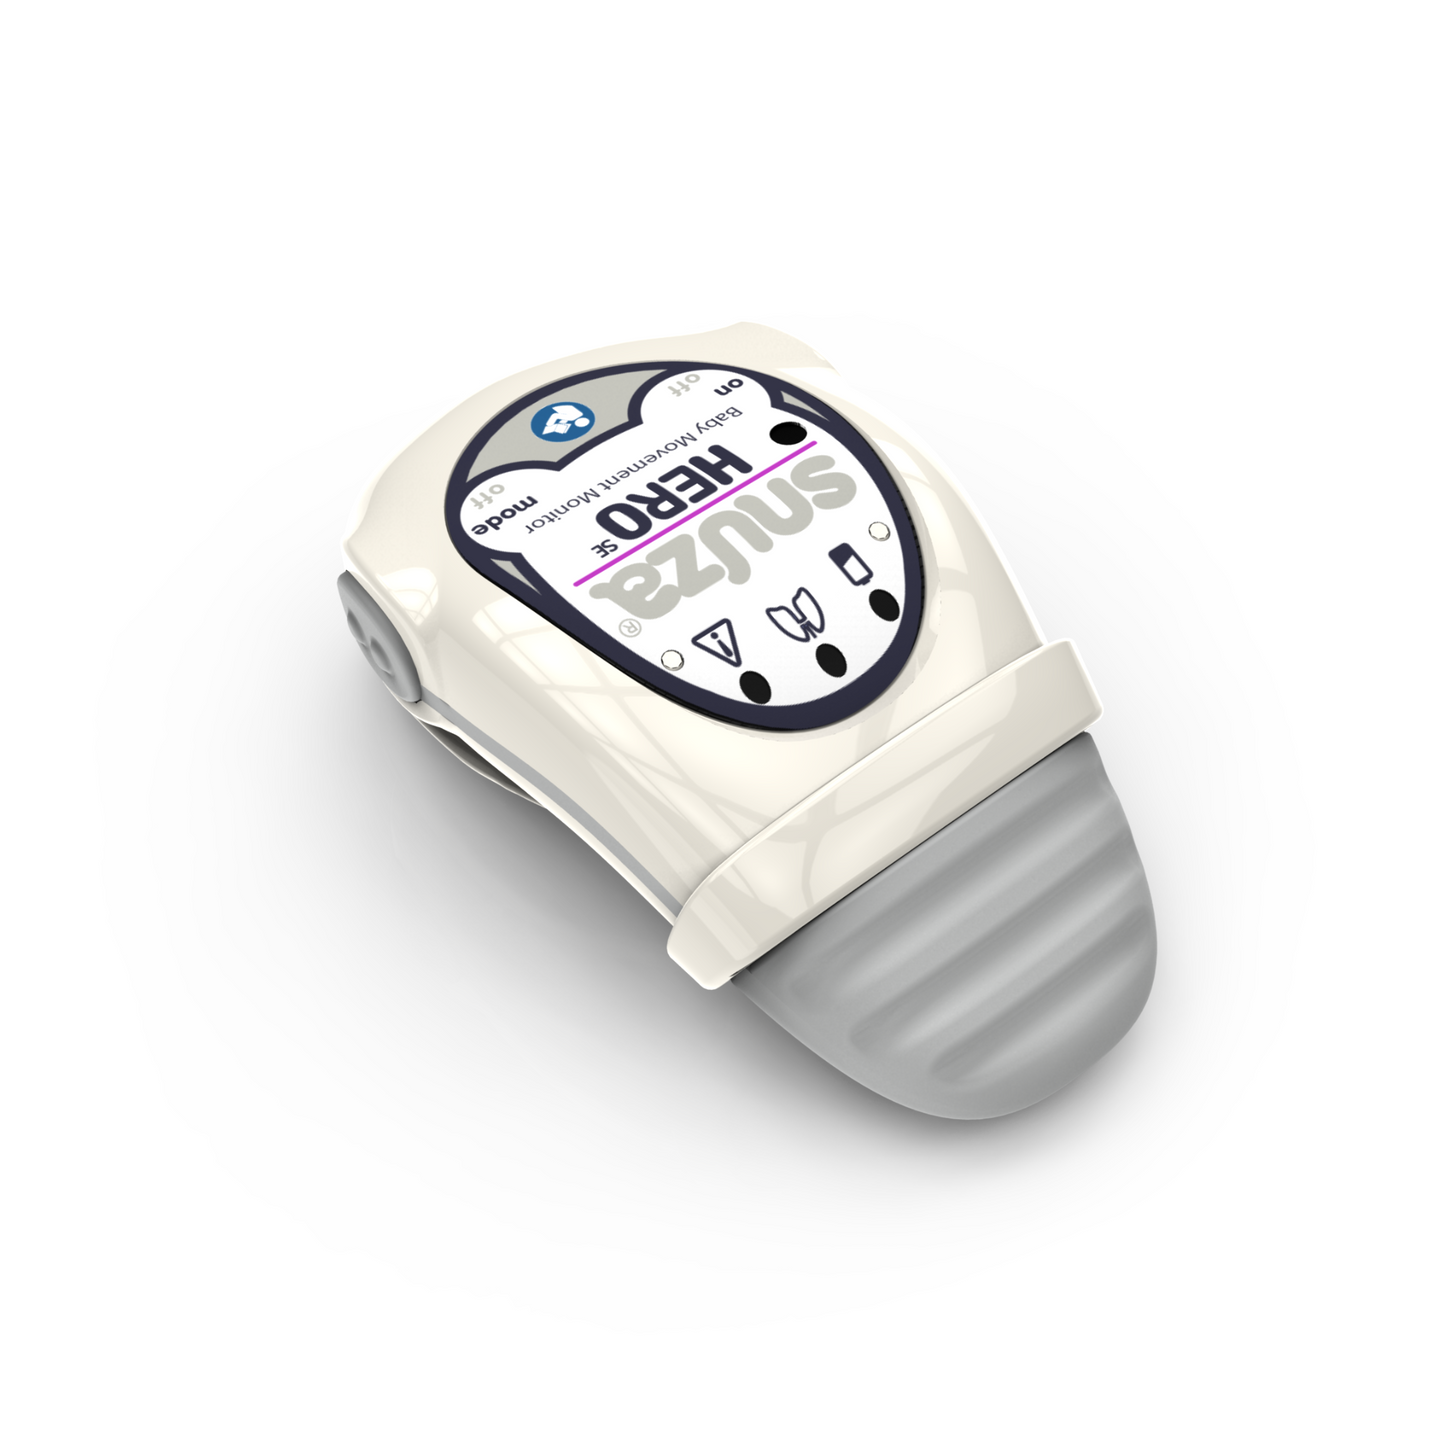 SNUZA Hero - Portable, Wearable Baby Abdominal Movement Monitor with Vibration and Alarm.